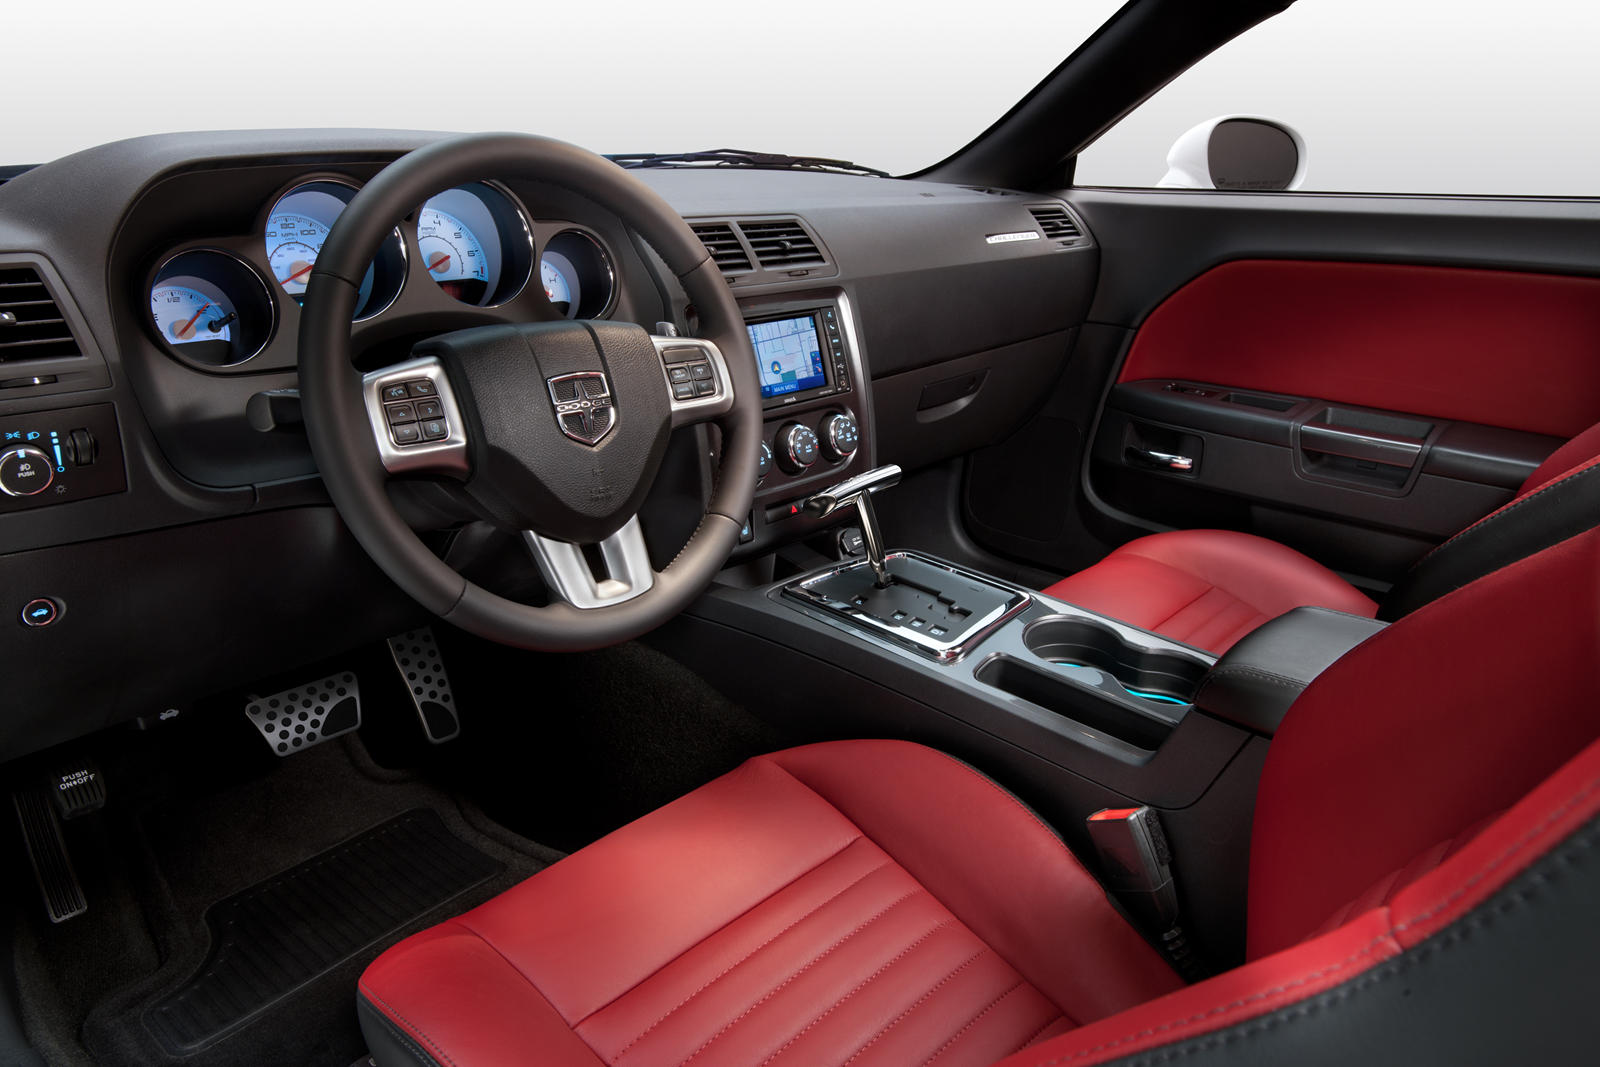 Pic of 2015 challenger interior | Dodge Challenger Forum